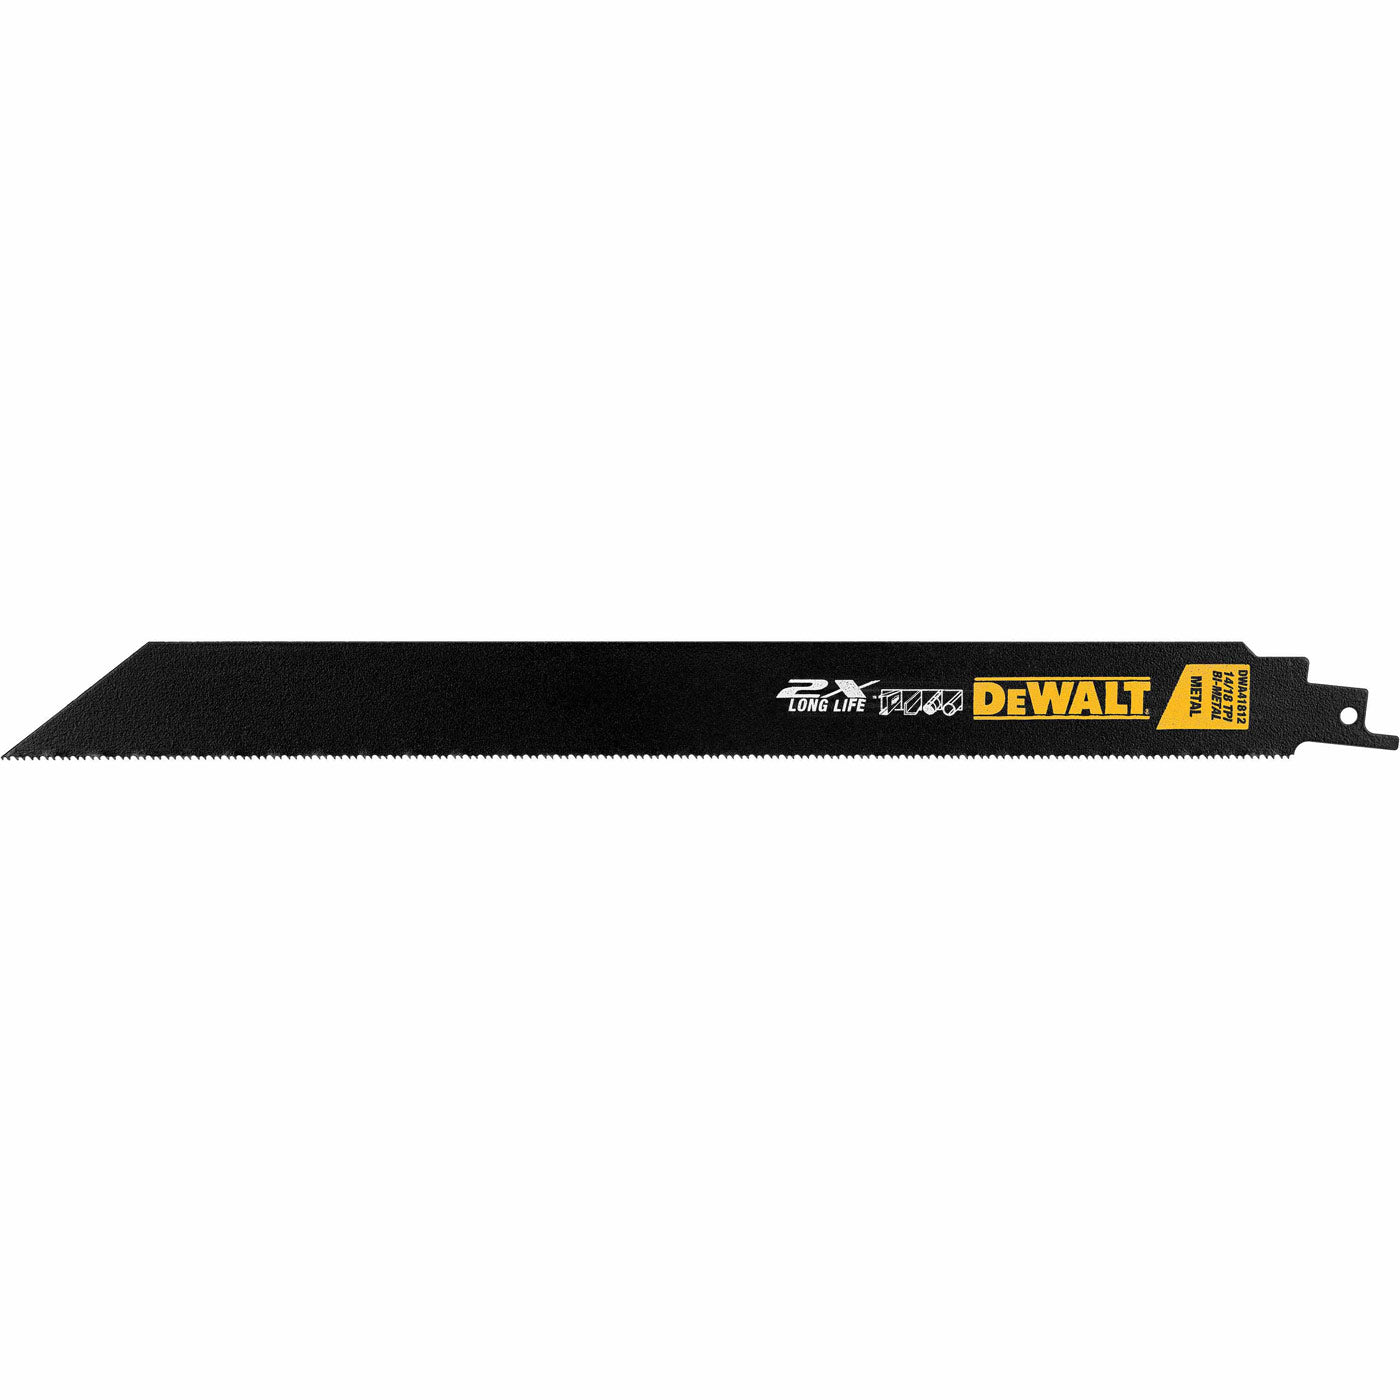 DeWalt DWA41812 12" 2X Premium Metal Cutting Reciprocating Blade (5 pack)